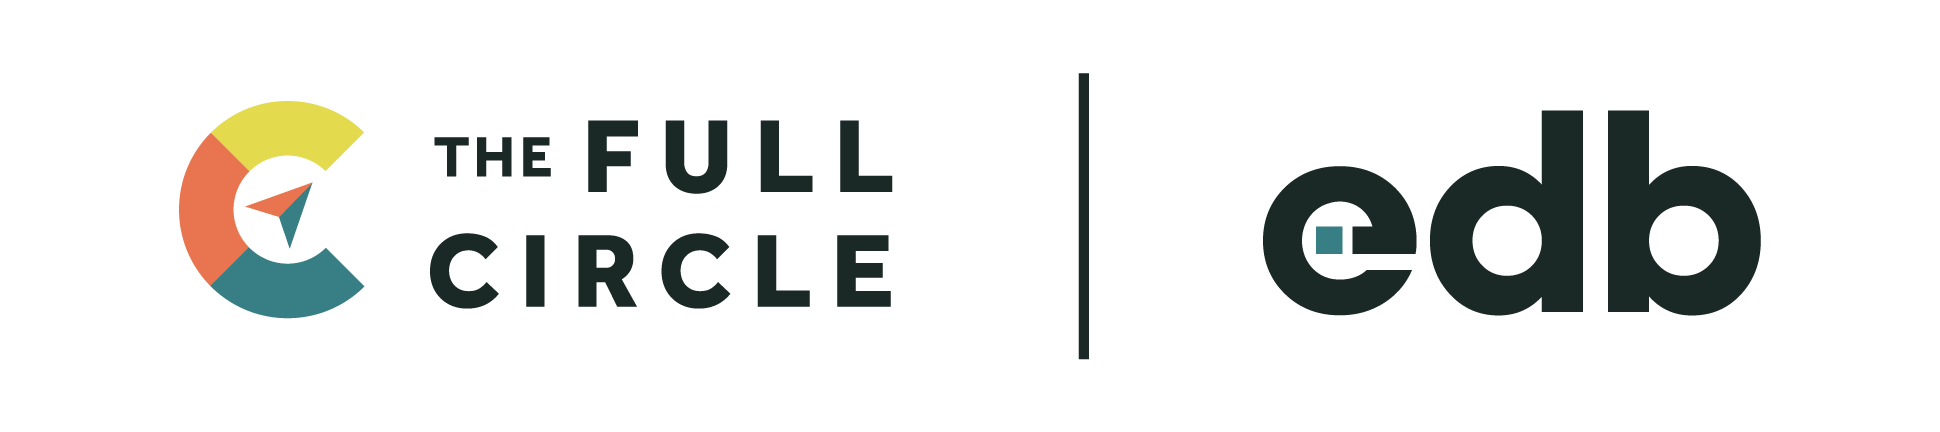 TheFullCircle Logo